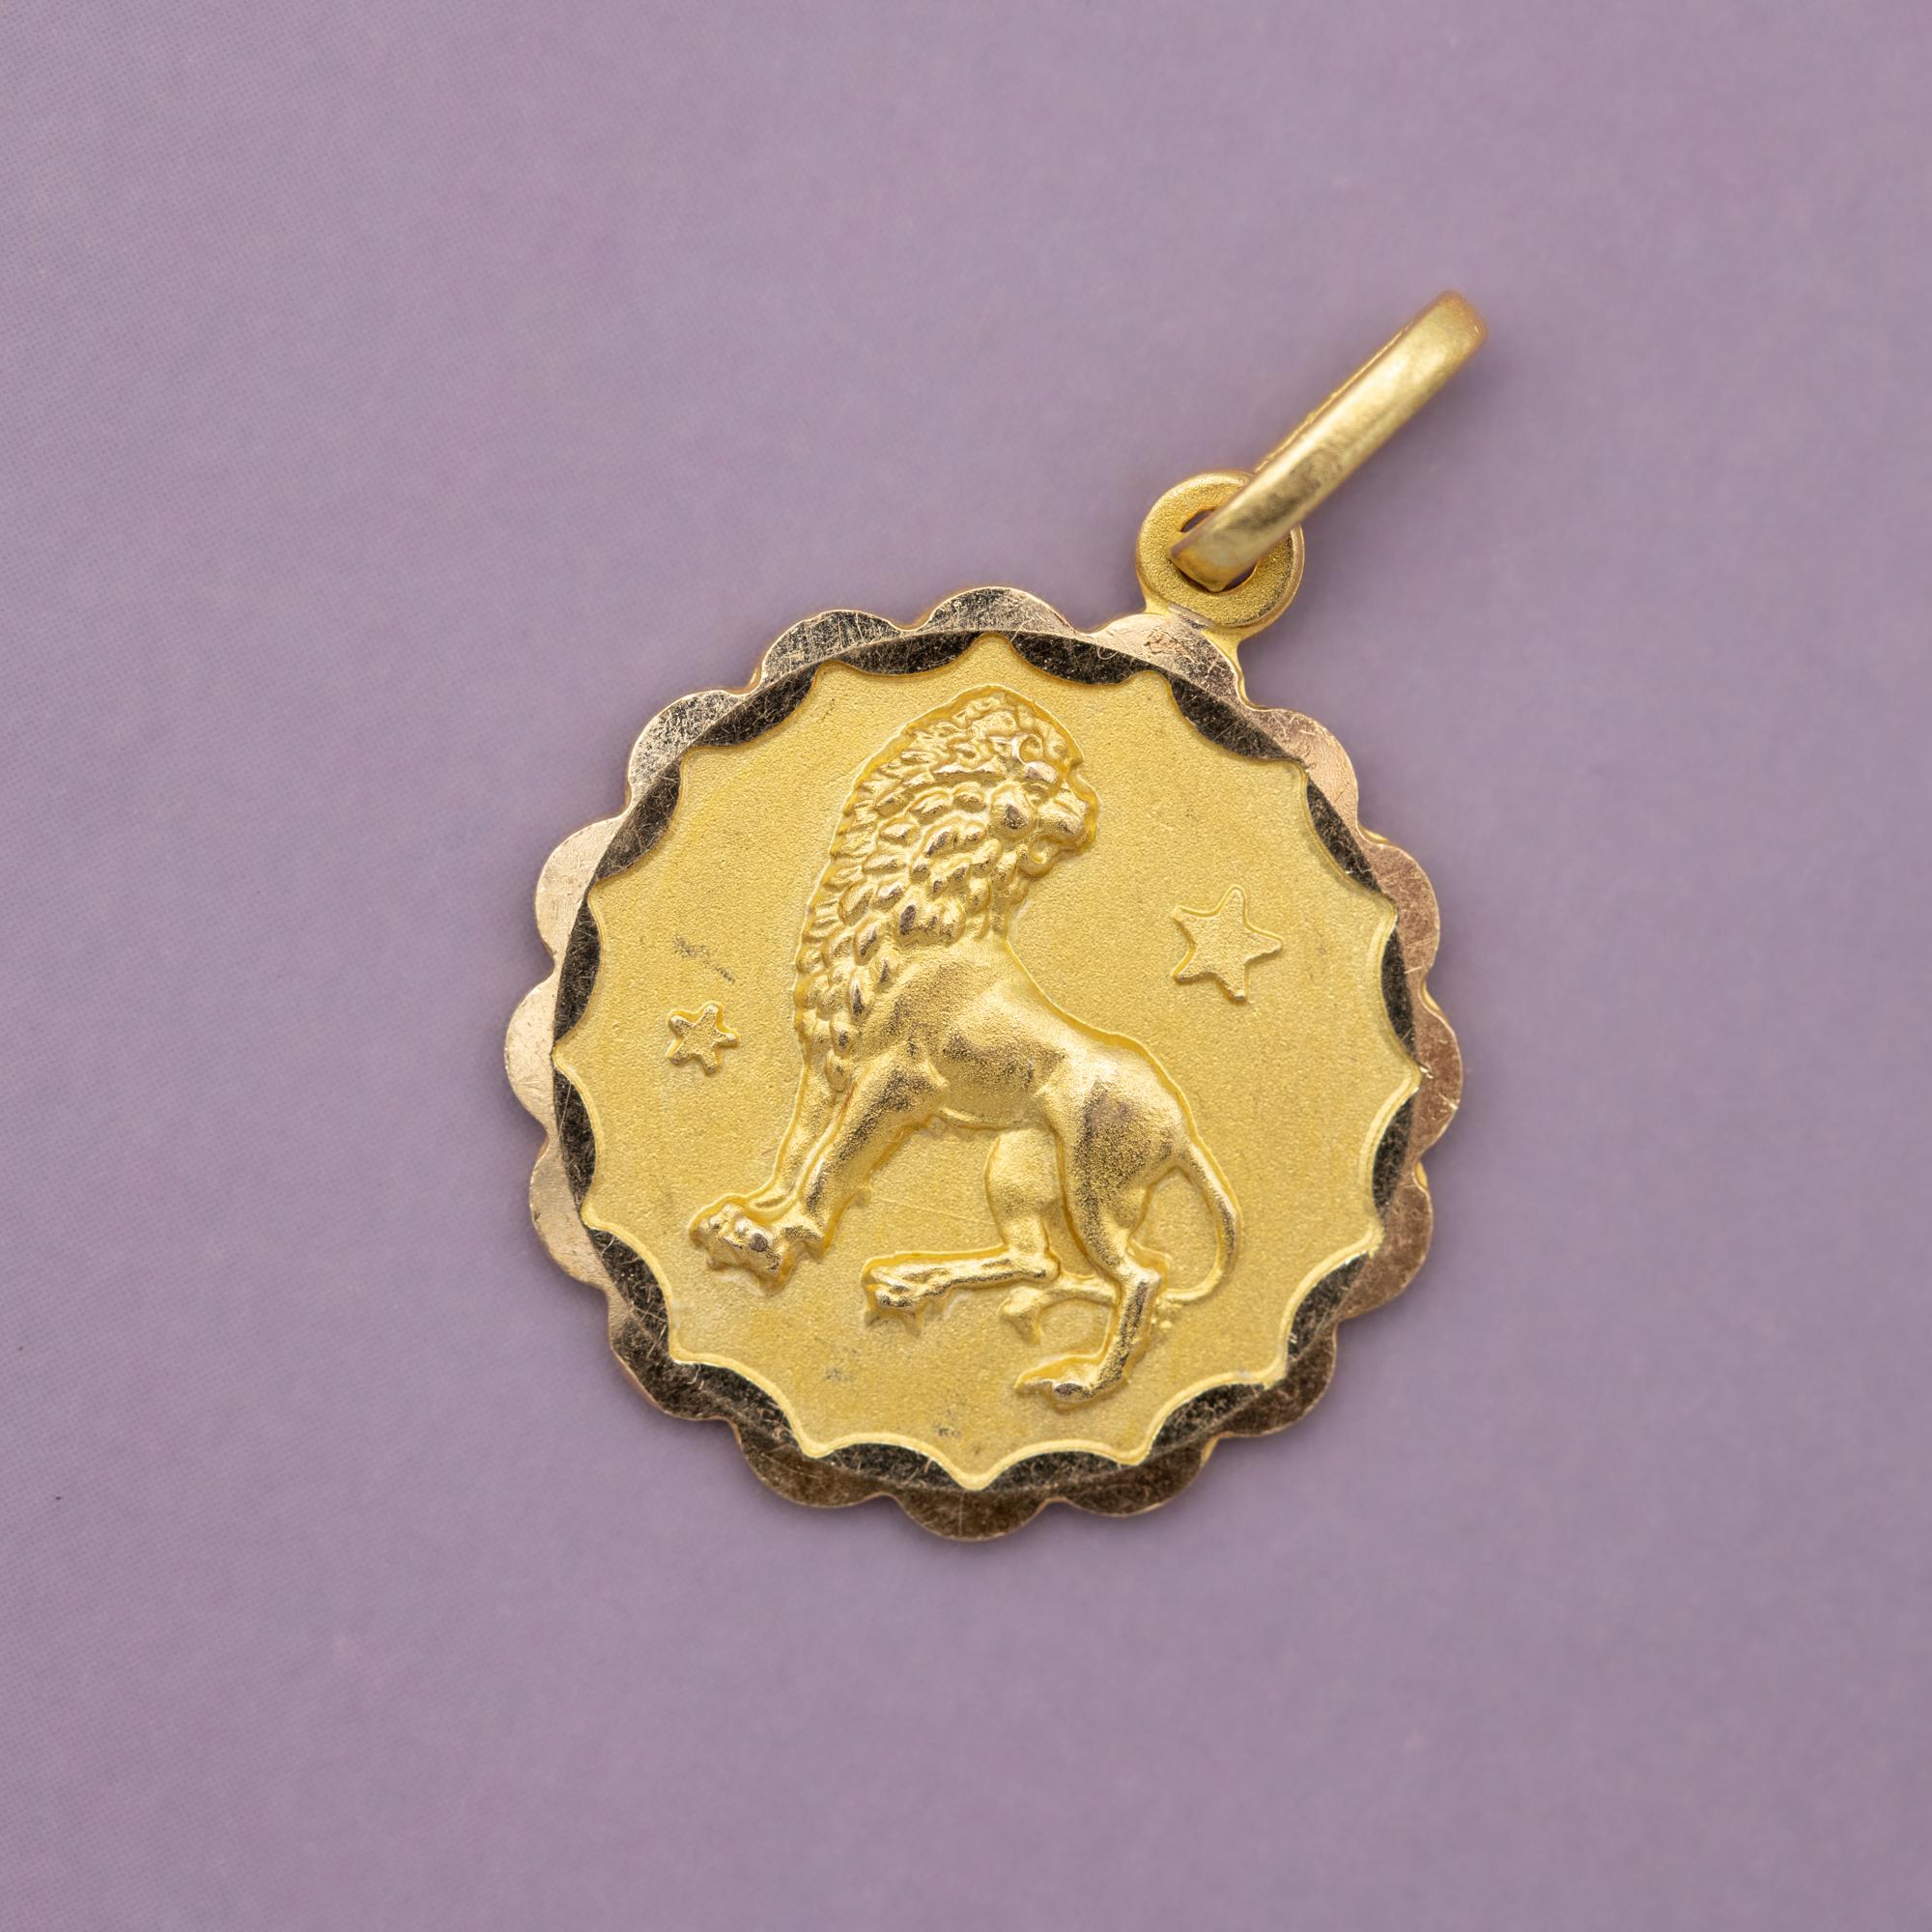 Modern Vintage 18 k Italian zodiac pendant - Leo charm - solid yellow gold - Star sign